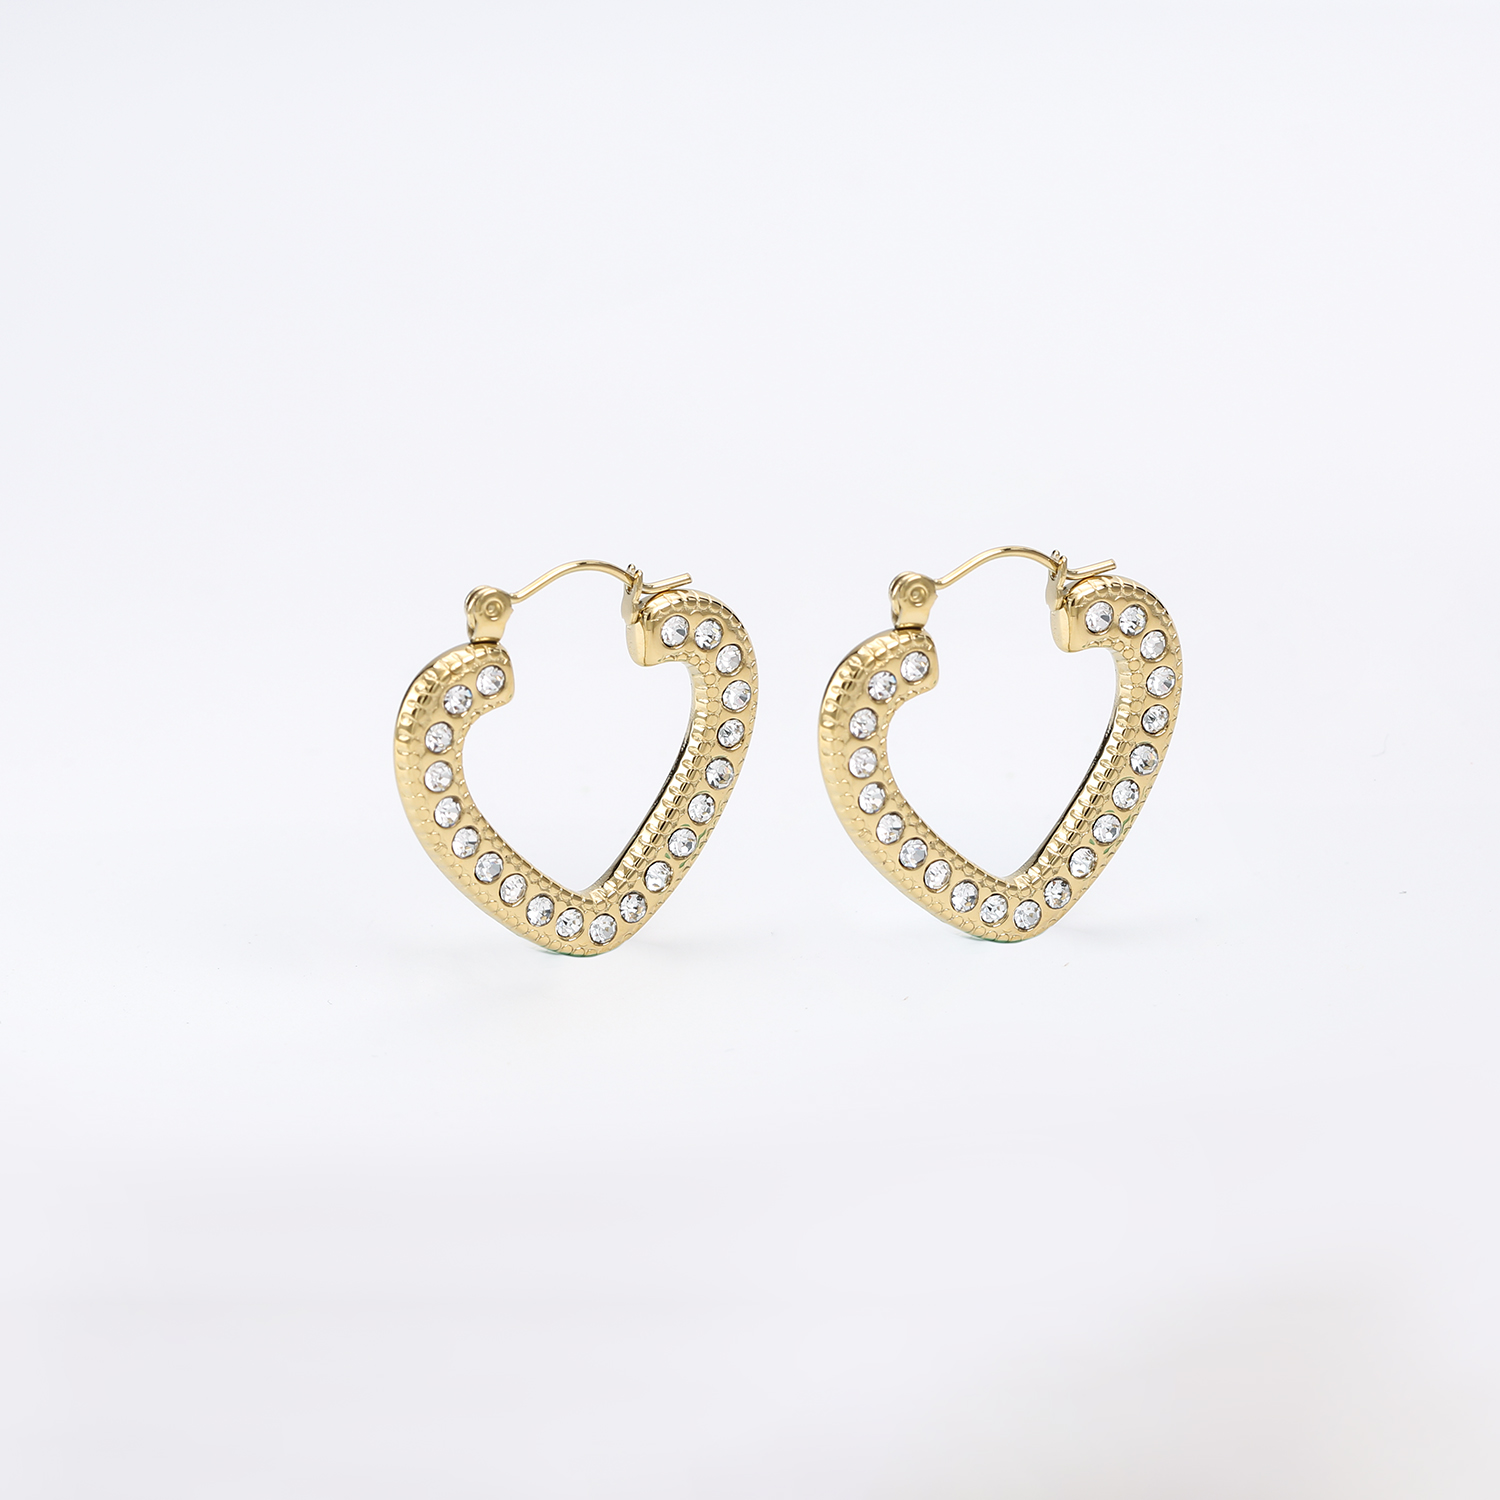 Wholesale C Shaped Earring Non Tarnish Stainless Steel Rhinestone Gold Hoop Earrings